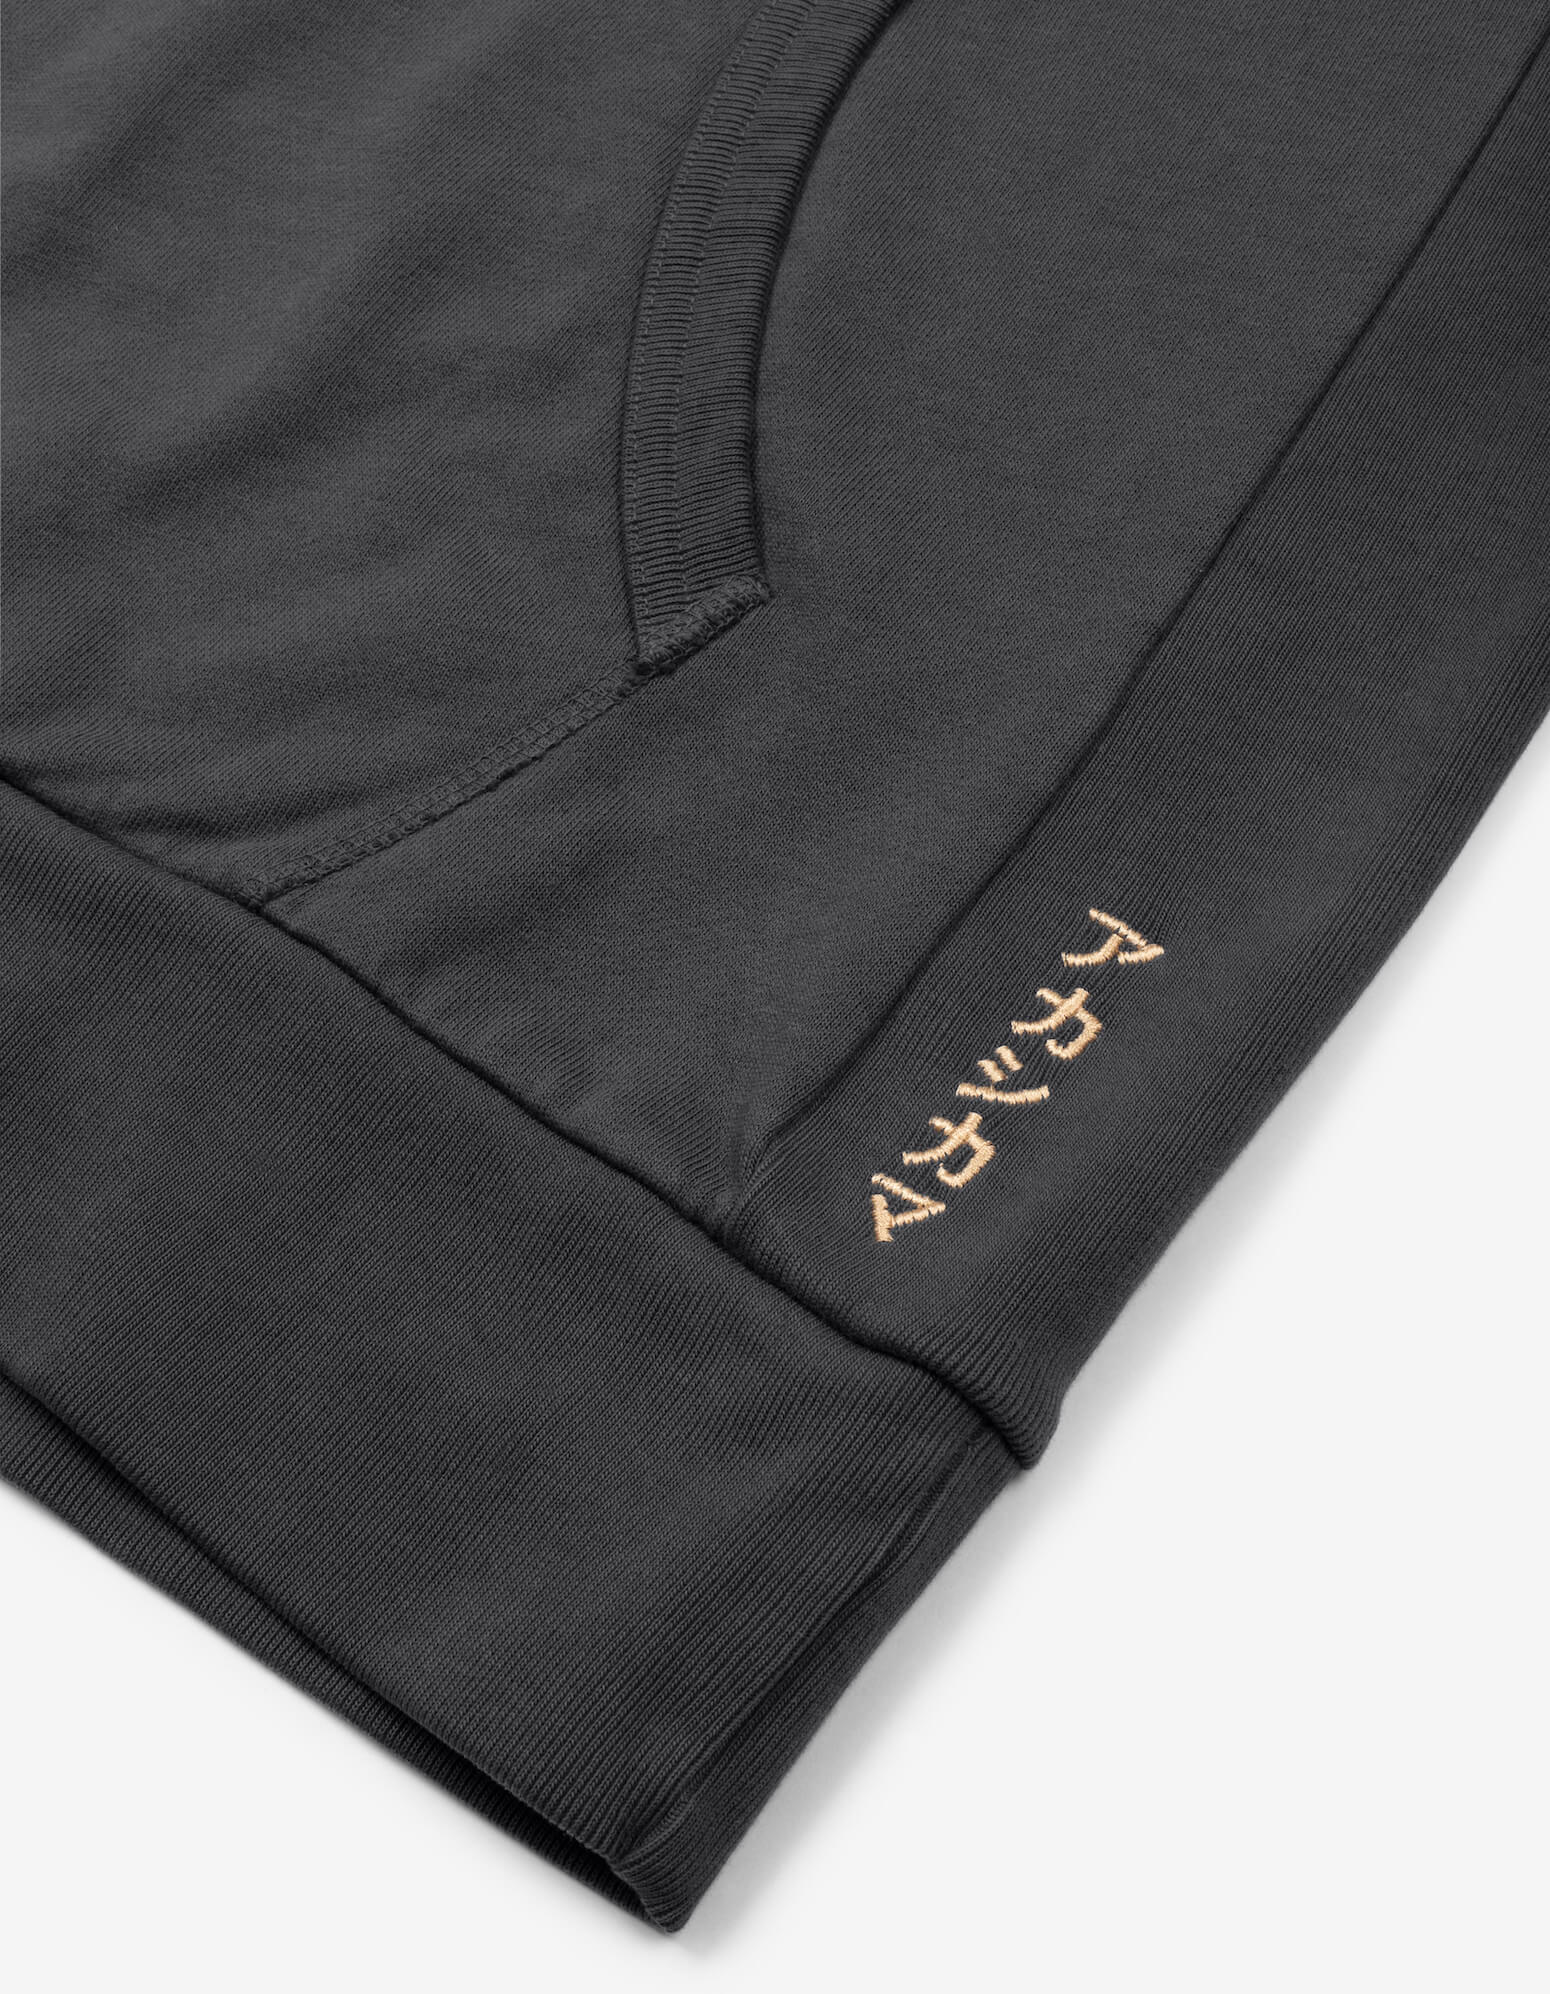 Uniform AKASHI-KAMA Hoodie in Slate | Garment Dye Japanese Streetwear Sweatshirt